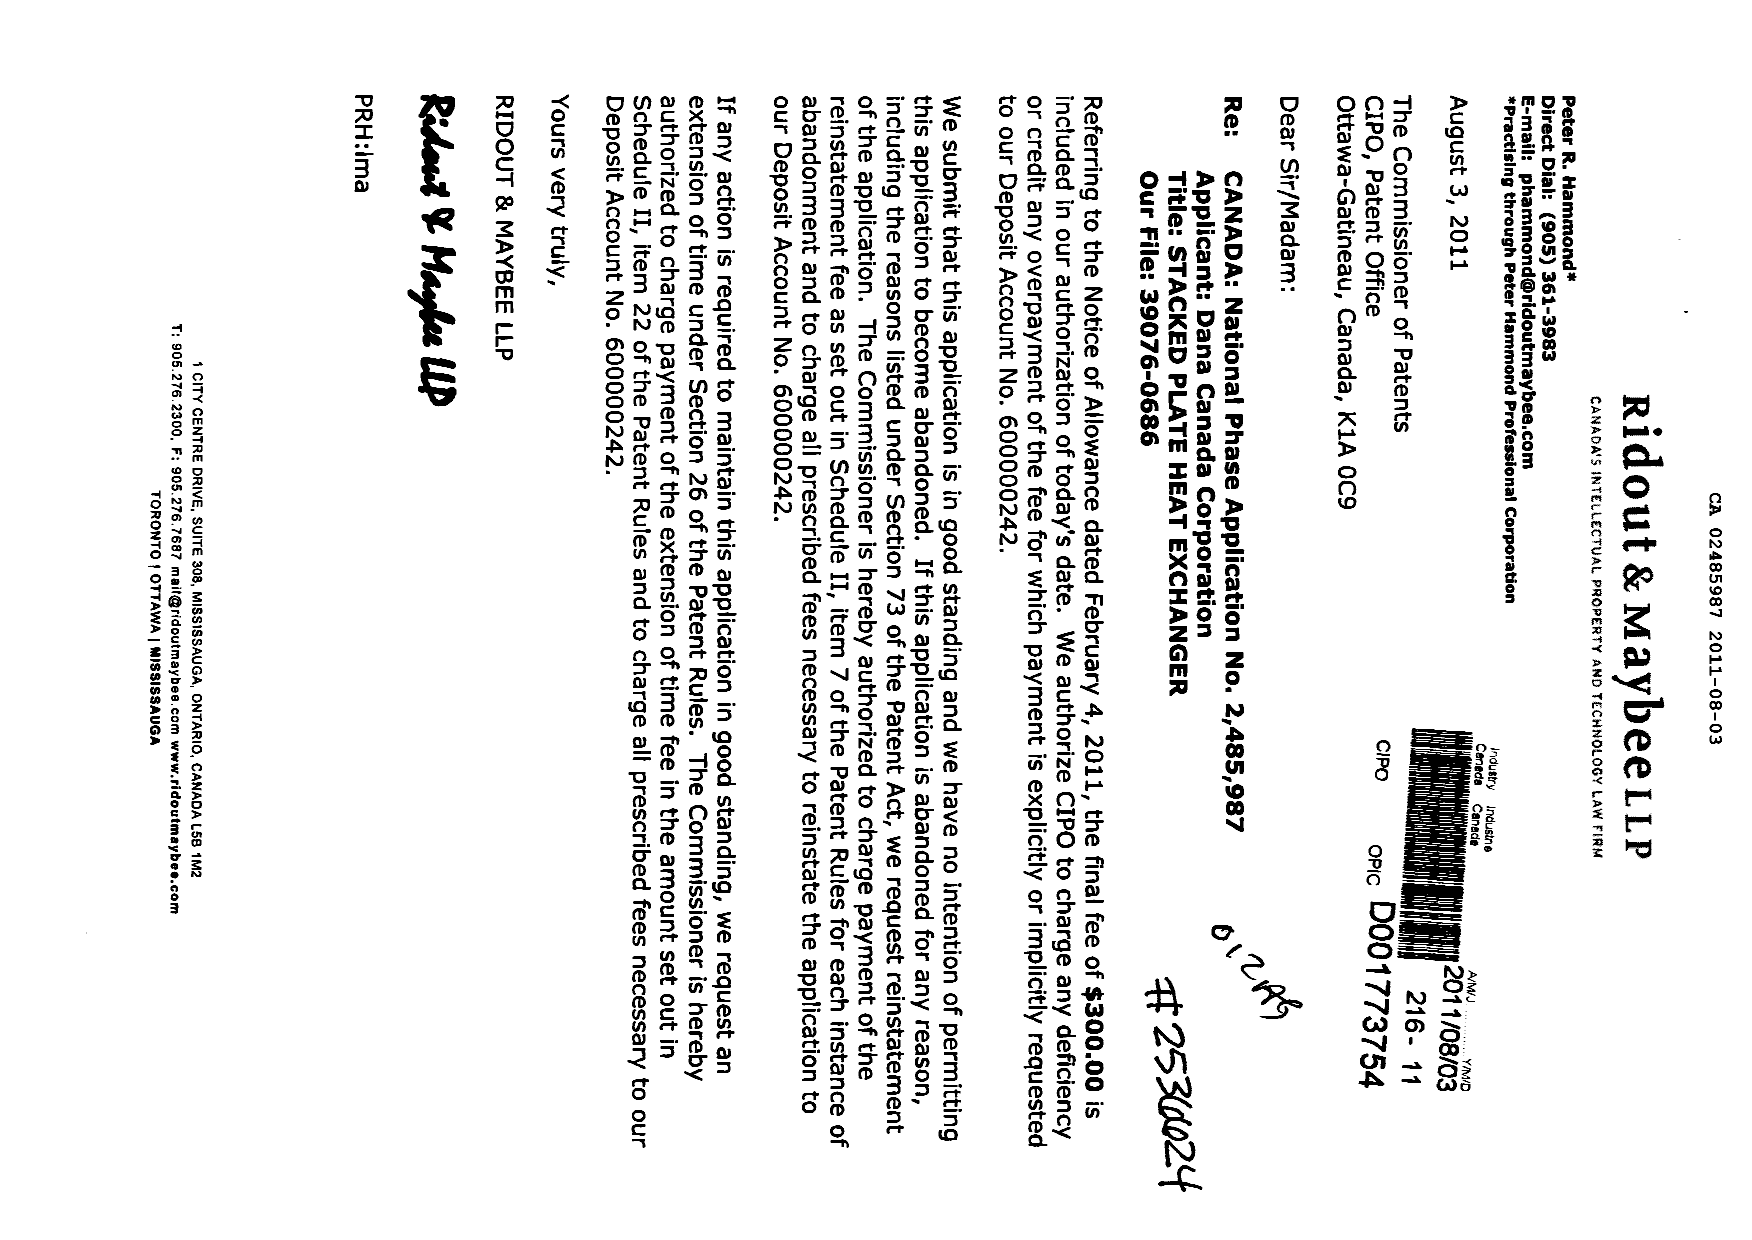 Canadian Patent Document 2485987. Correspondence 20110803. Image 1 of 1